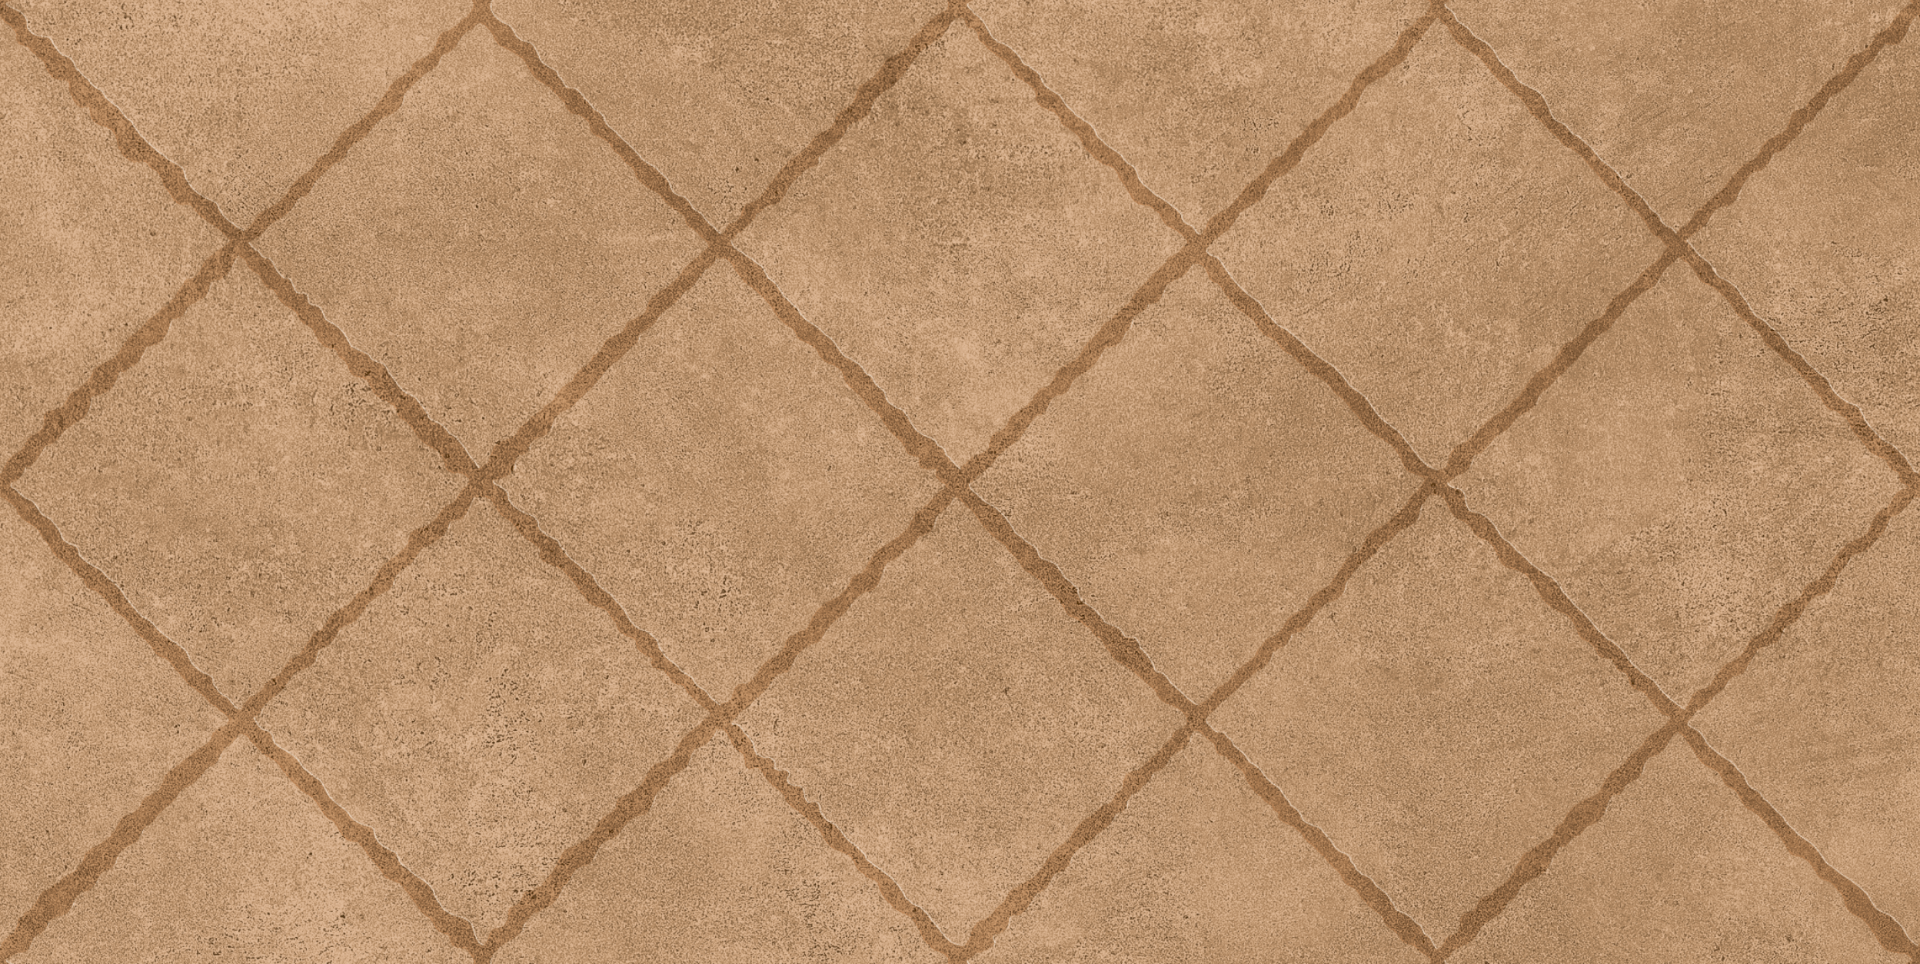 All Tiles for Bathroom Tiles, Kitchen Tiles, Accent Tiles